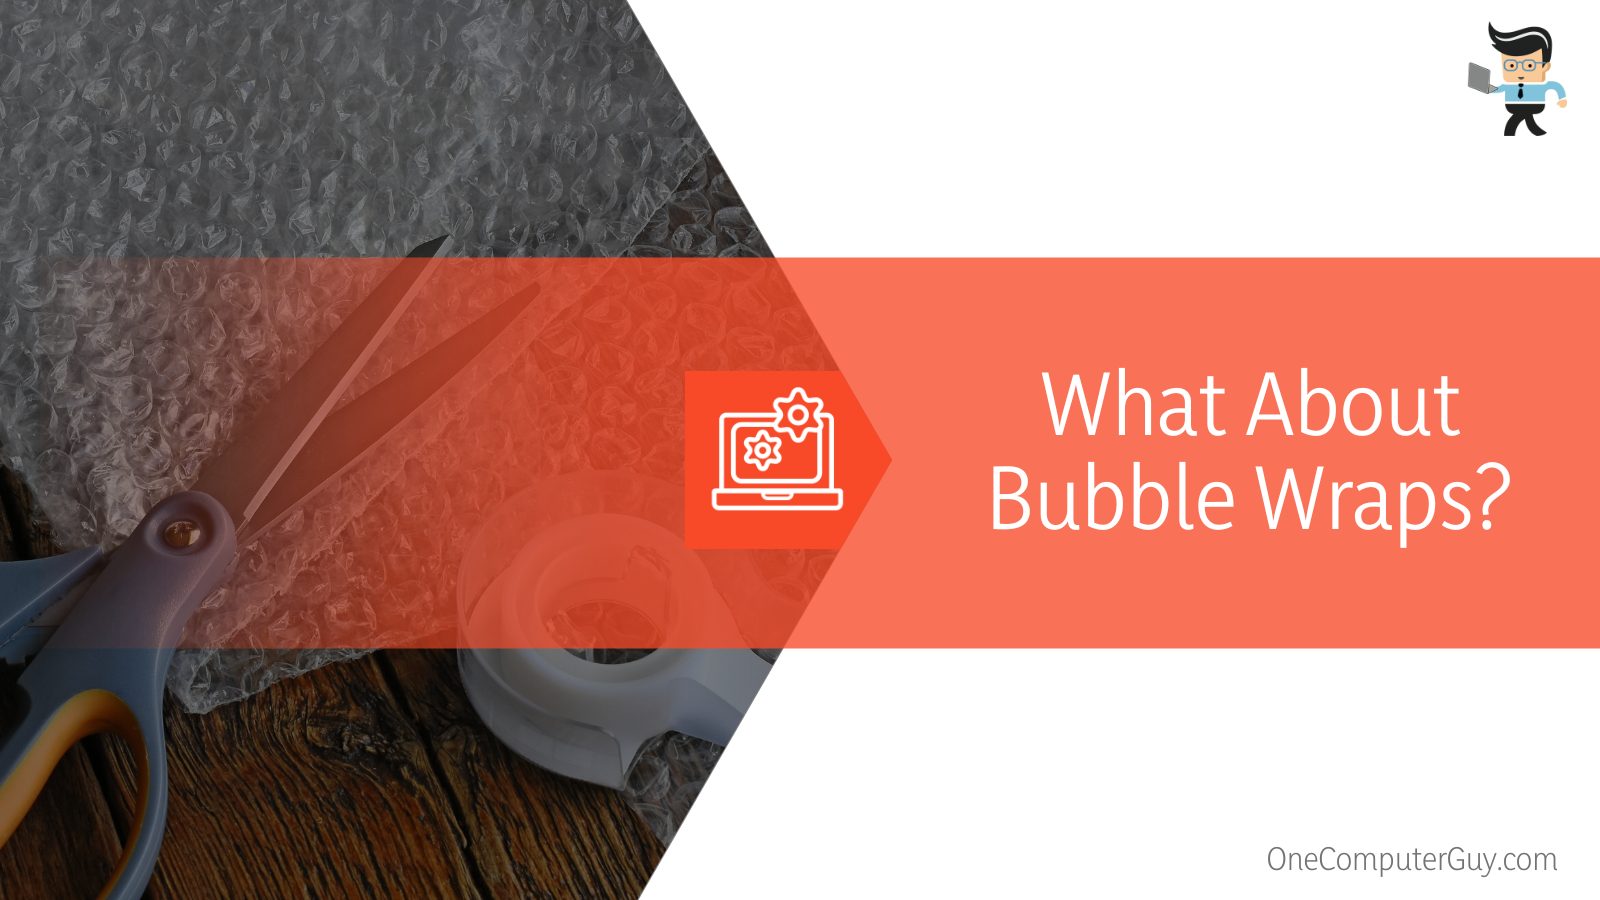 What About Bubble Wraps